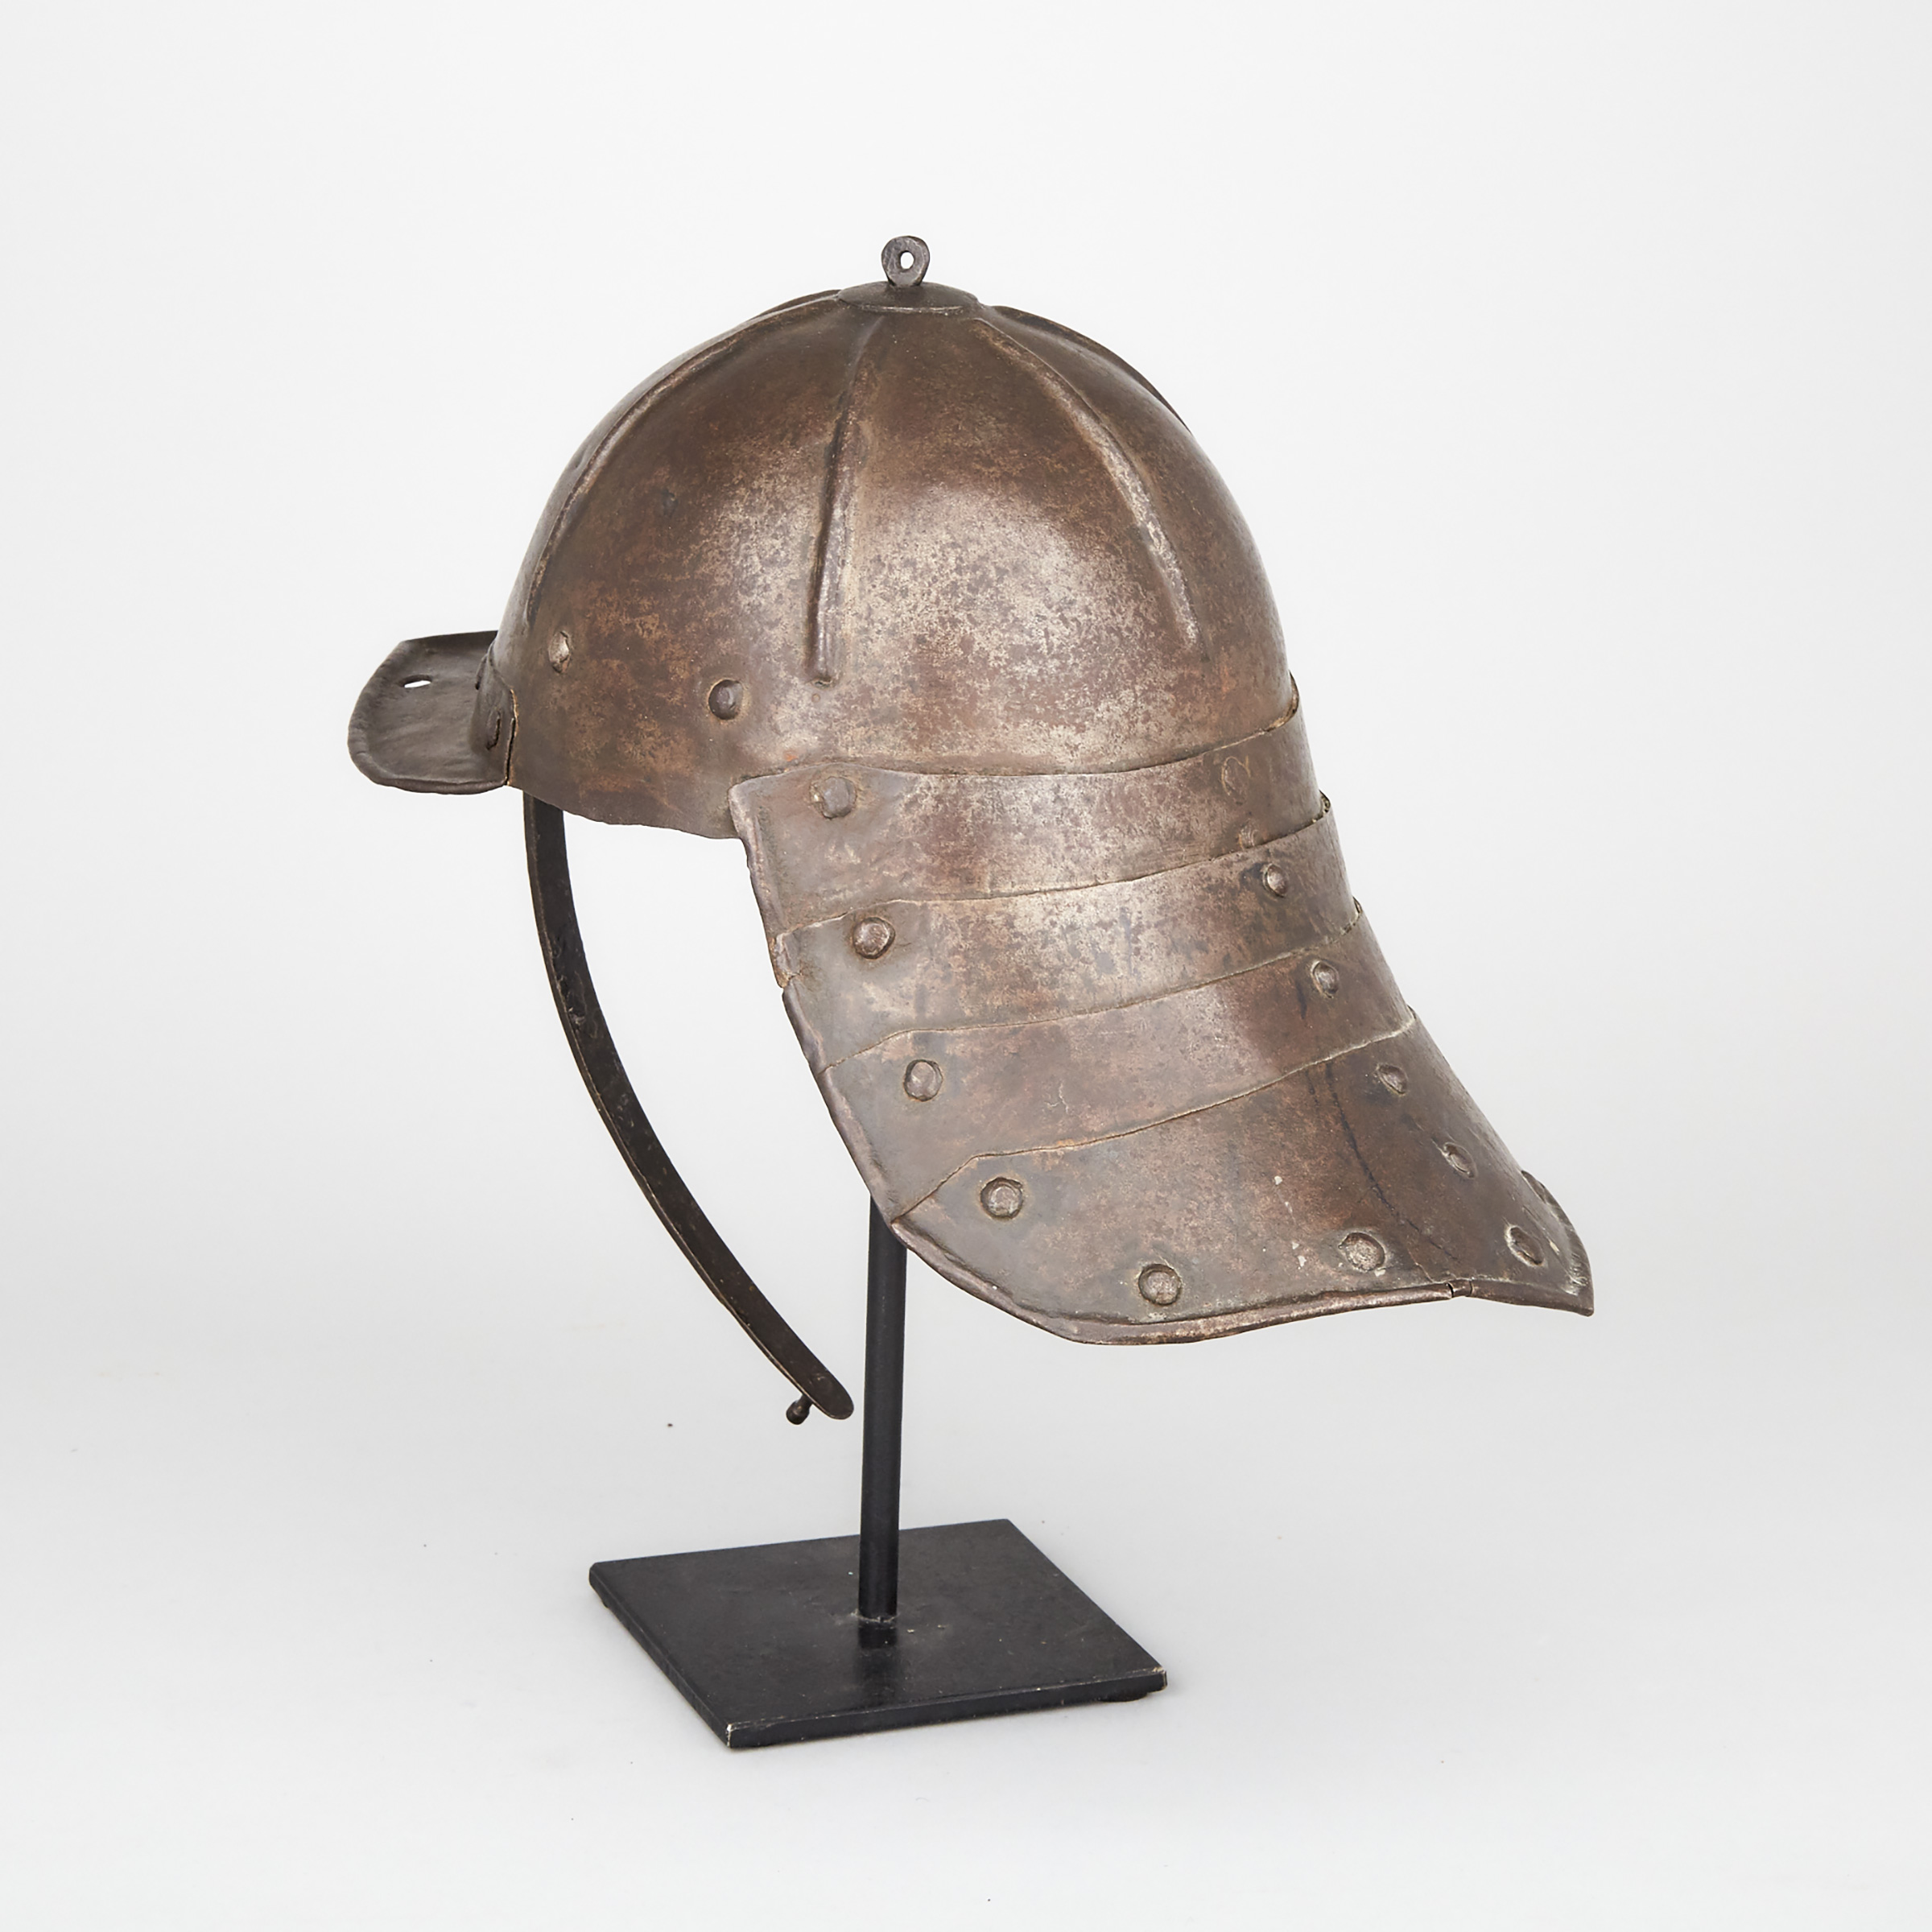 North European Lobstertail Helmet, early 17th century